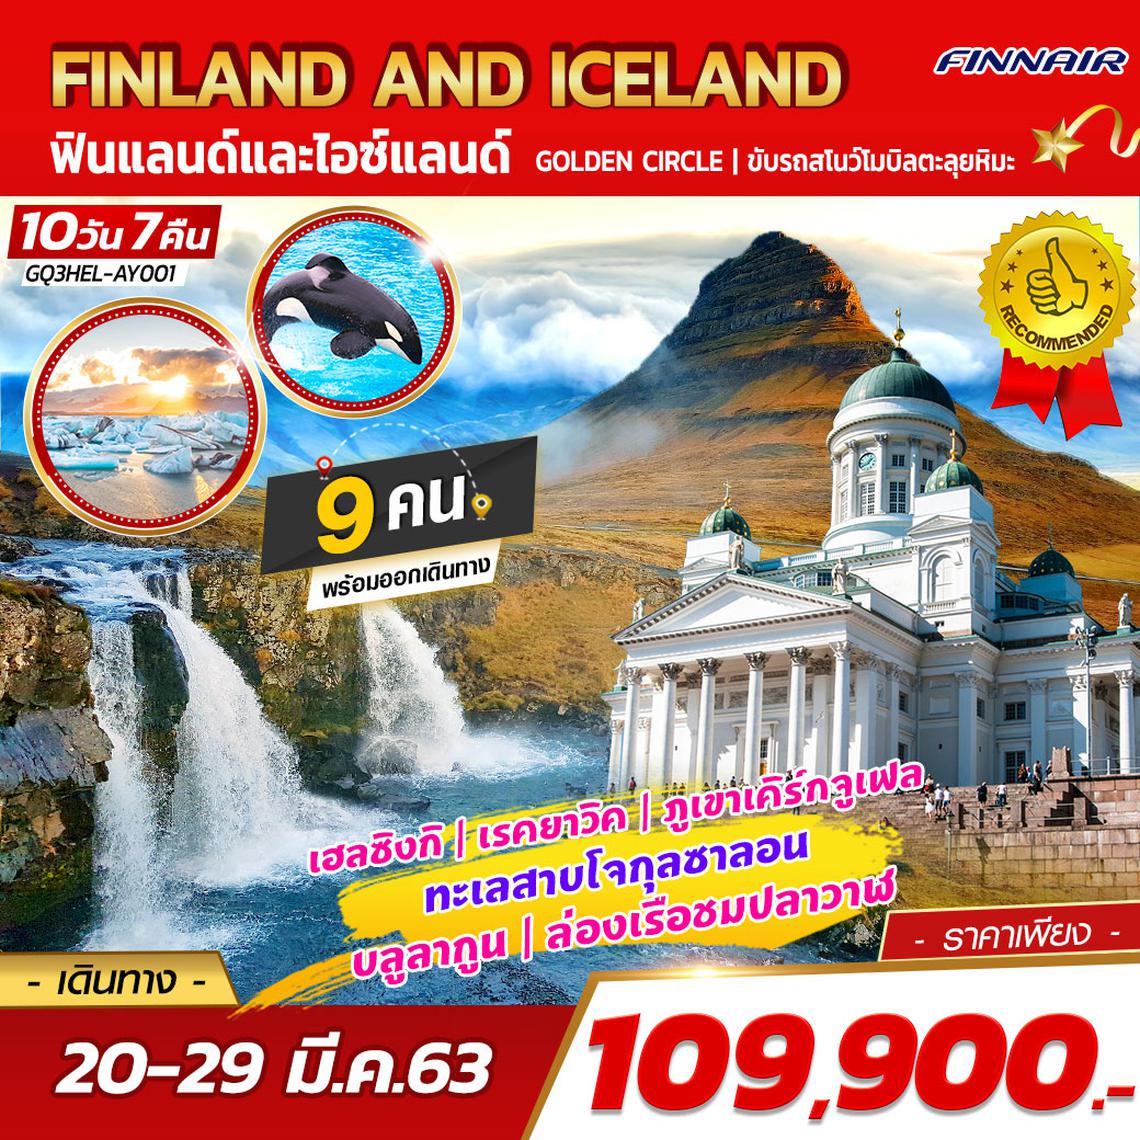 FINLAND AND ICELAND ฟินแลนด์และไอซ์แลนด์ 10 วัน 7 คืน โดยสายการบินฟินแอร์ (AY)